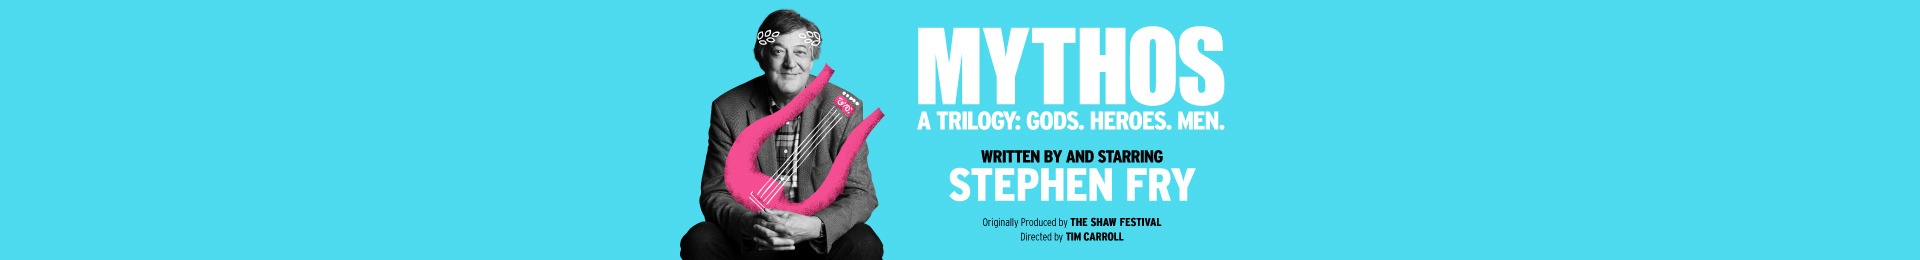 Stephen Fry Mythos a Trilogy: Heroes banner image